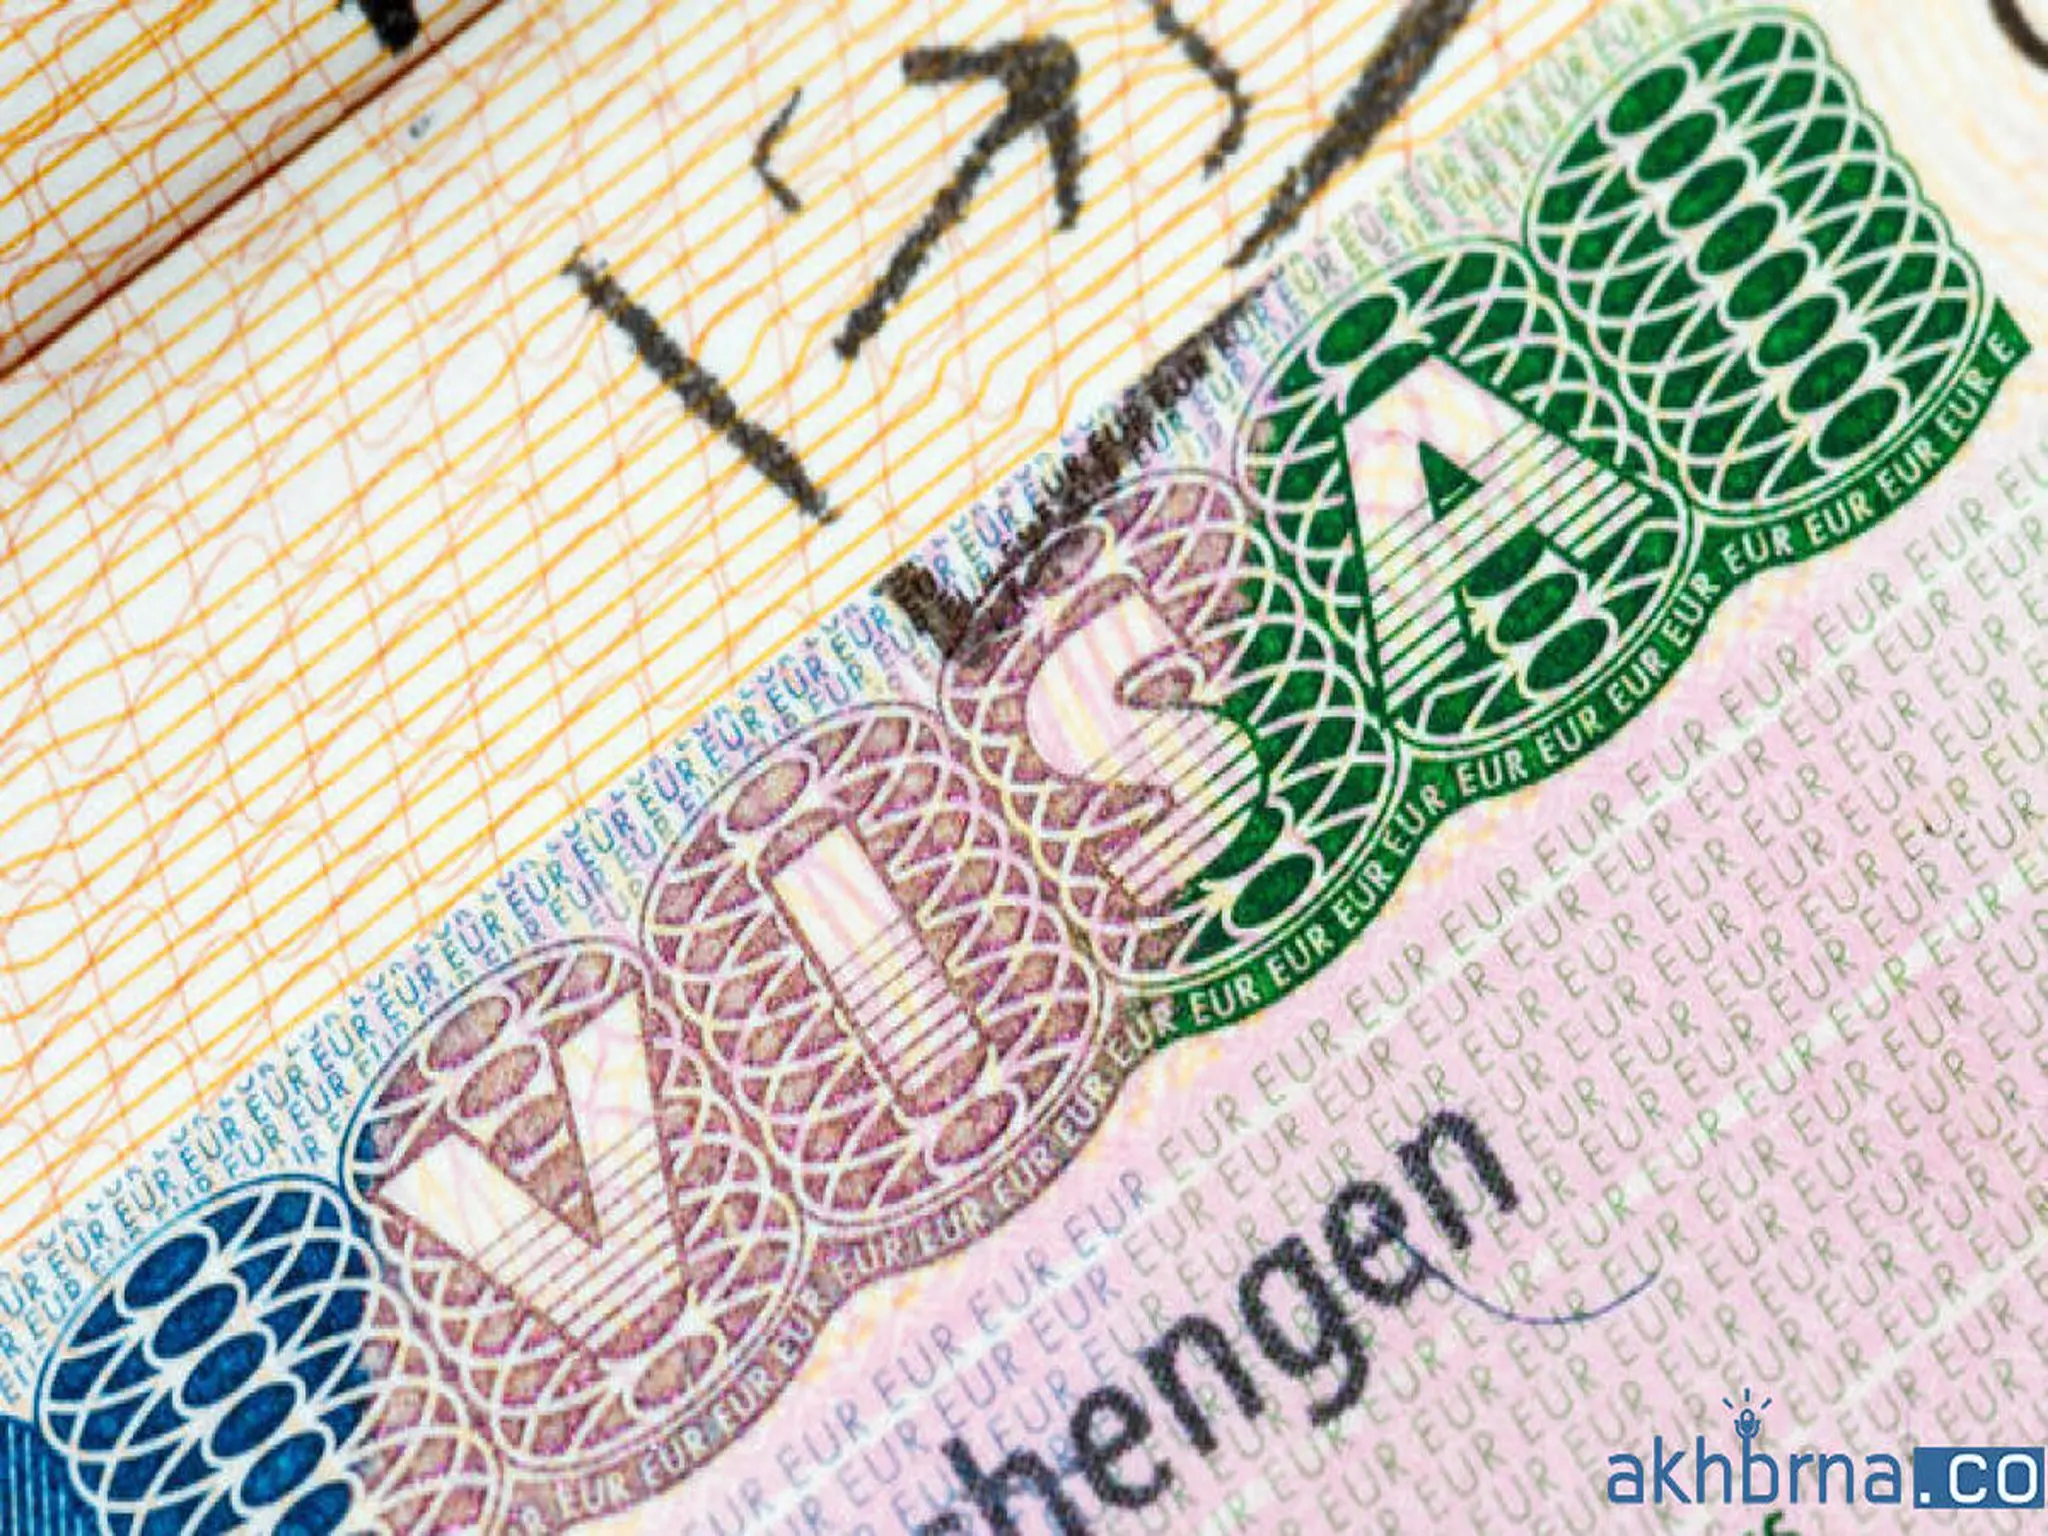 UAE cautions travelers against scammers offering "faster Schengen visas"